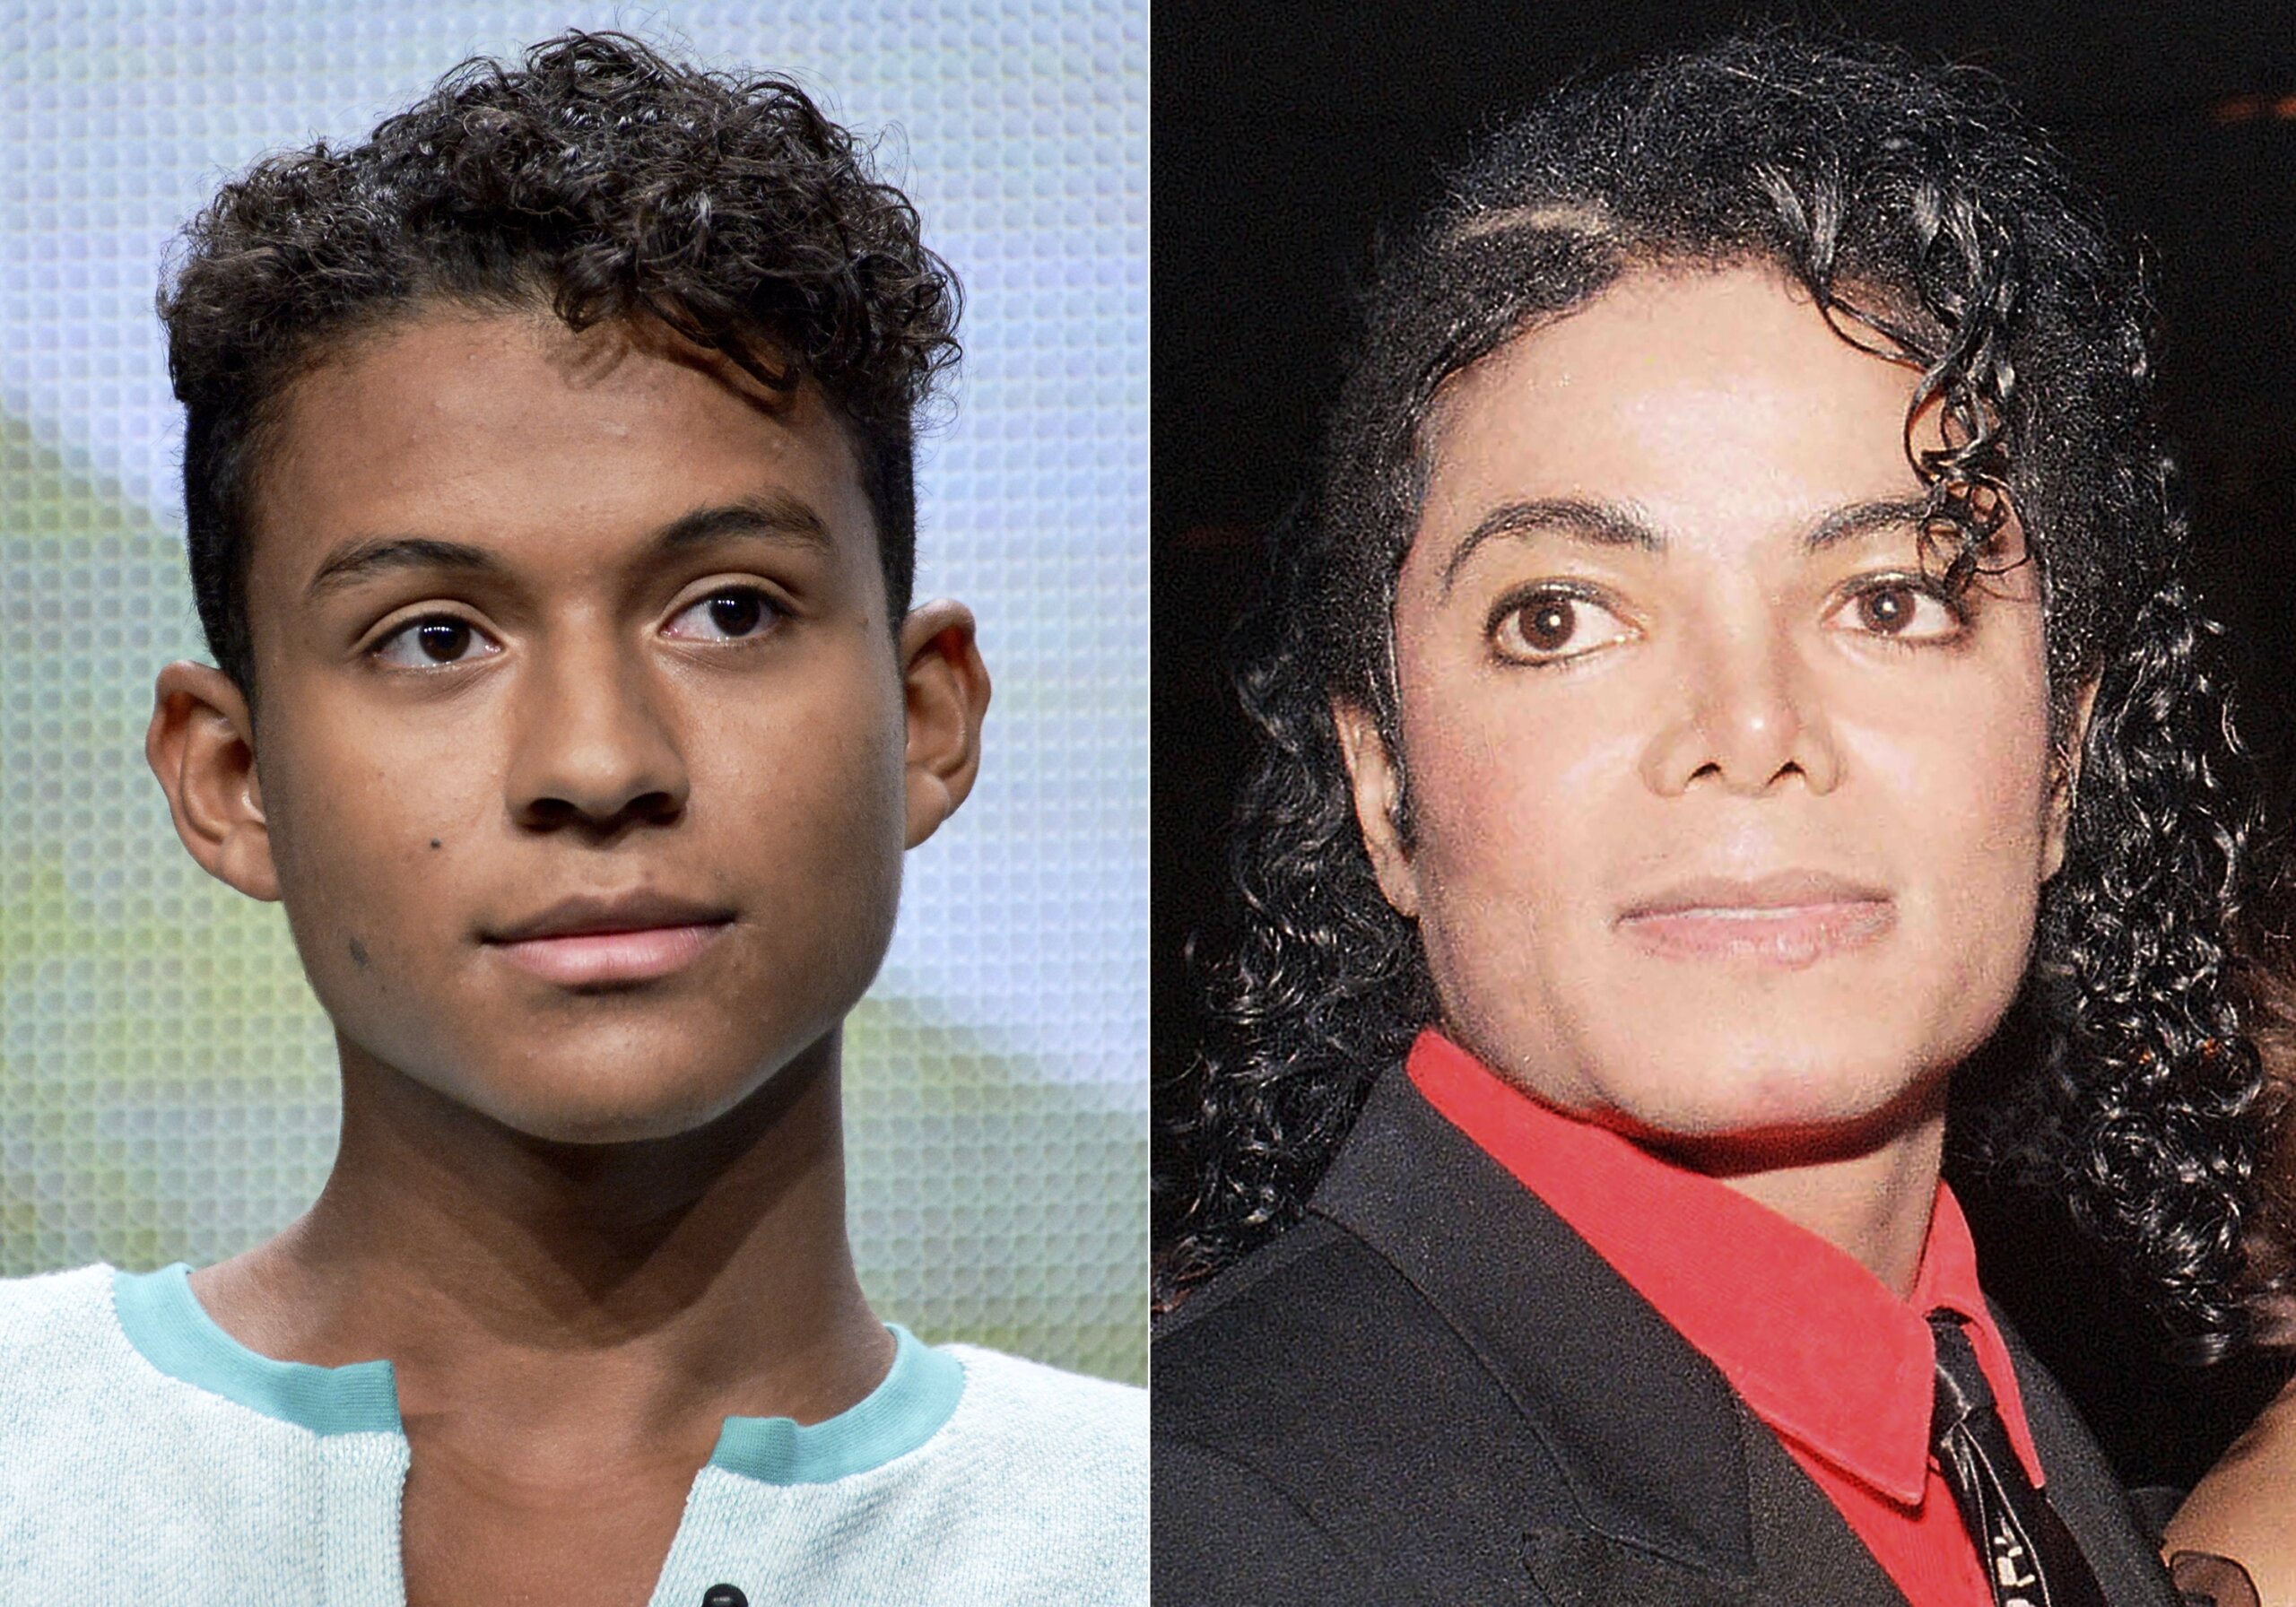 Michael Jackson’s nephew to star in King of Pop biopic